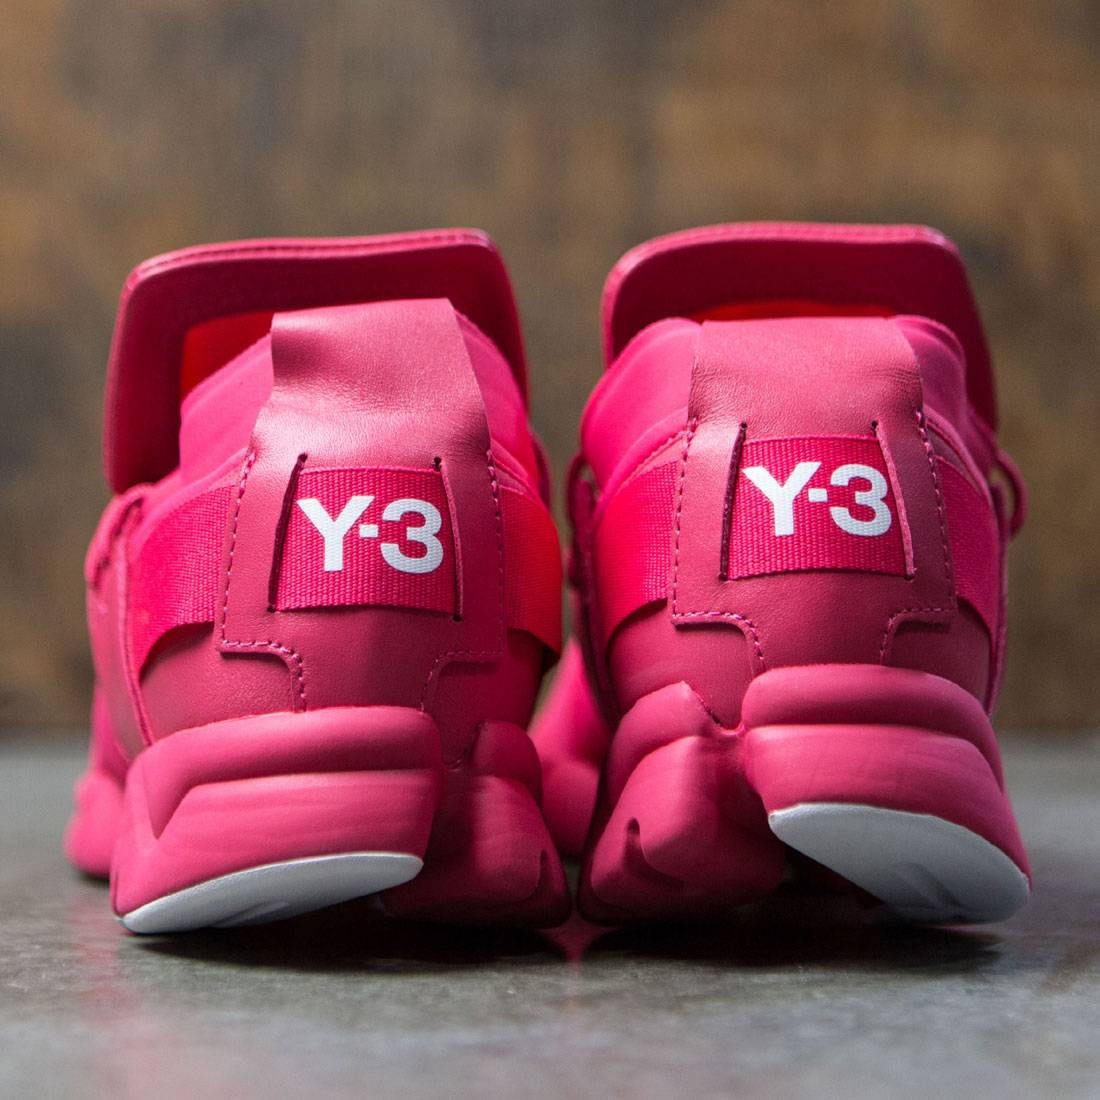 Adidas Y-3 Unisex Kydo pink blaze pink